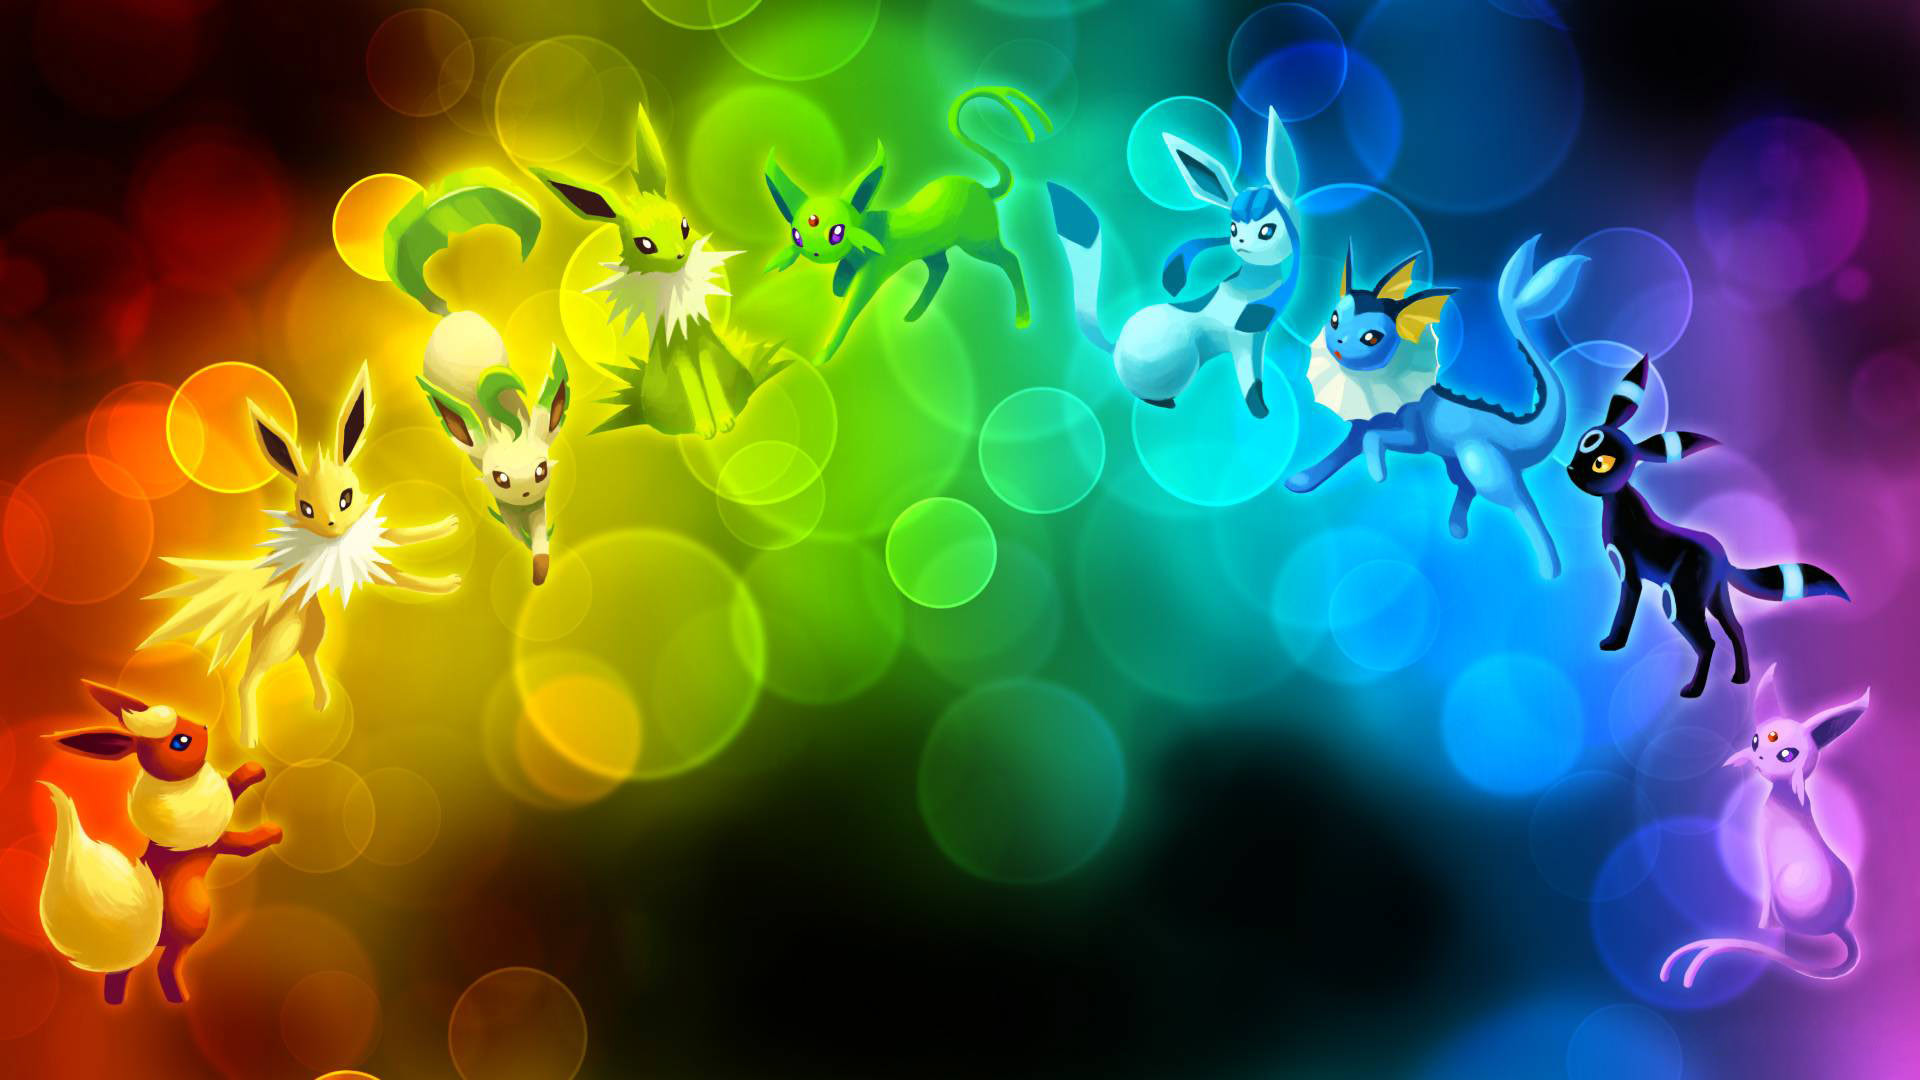 Live Wallpaper : Pokemon Eevee Evolution FREE Anime Live 1920Ã1080  Eeveelutions Wallpapers (39